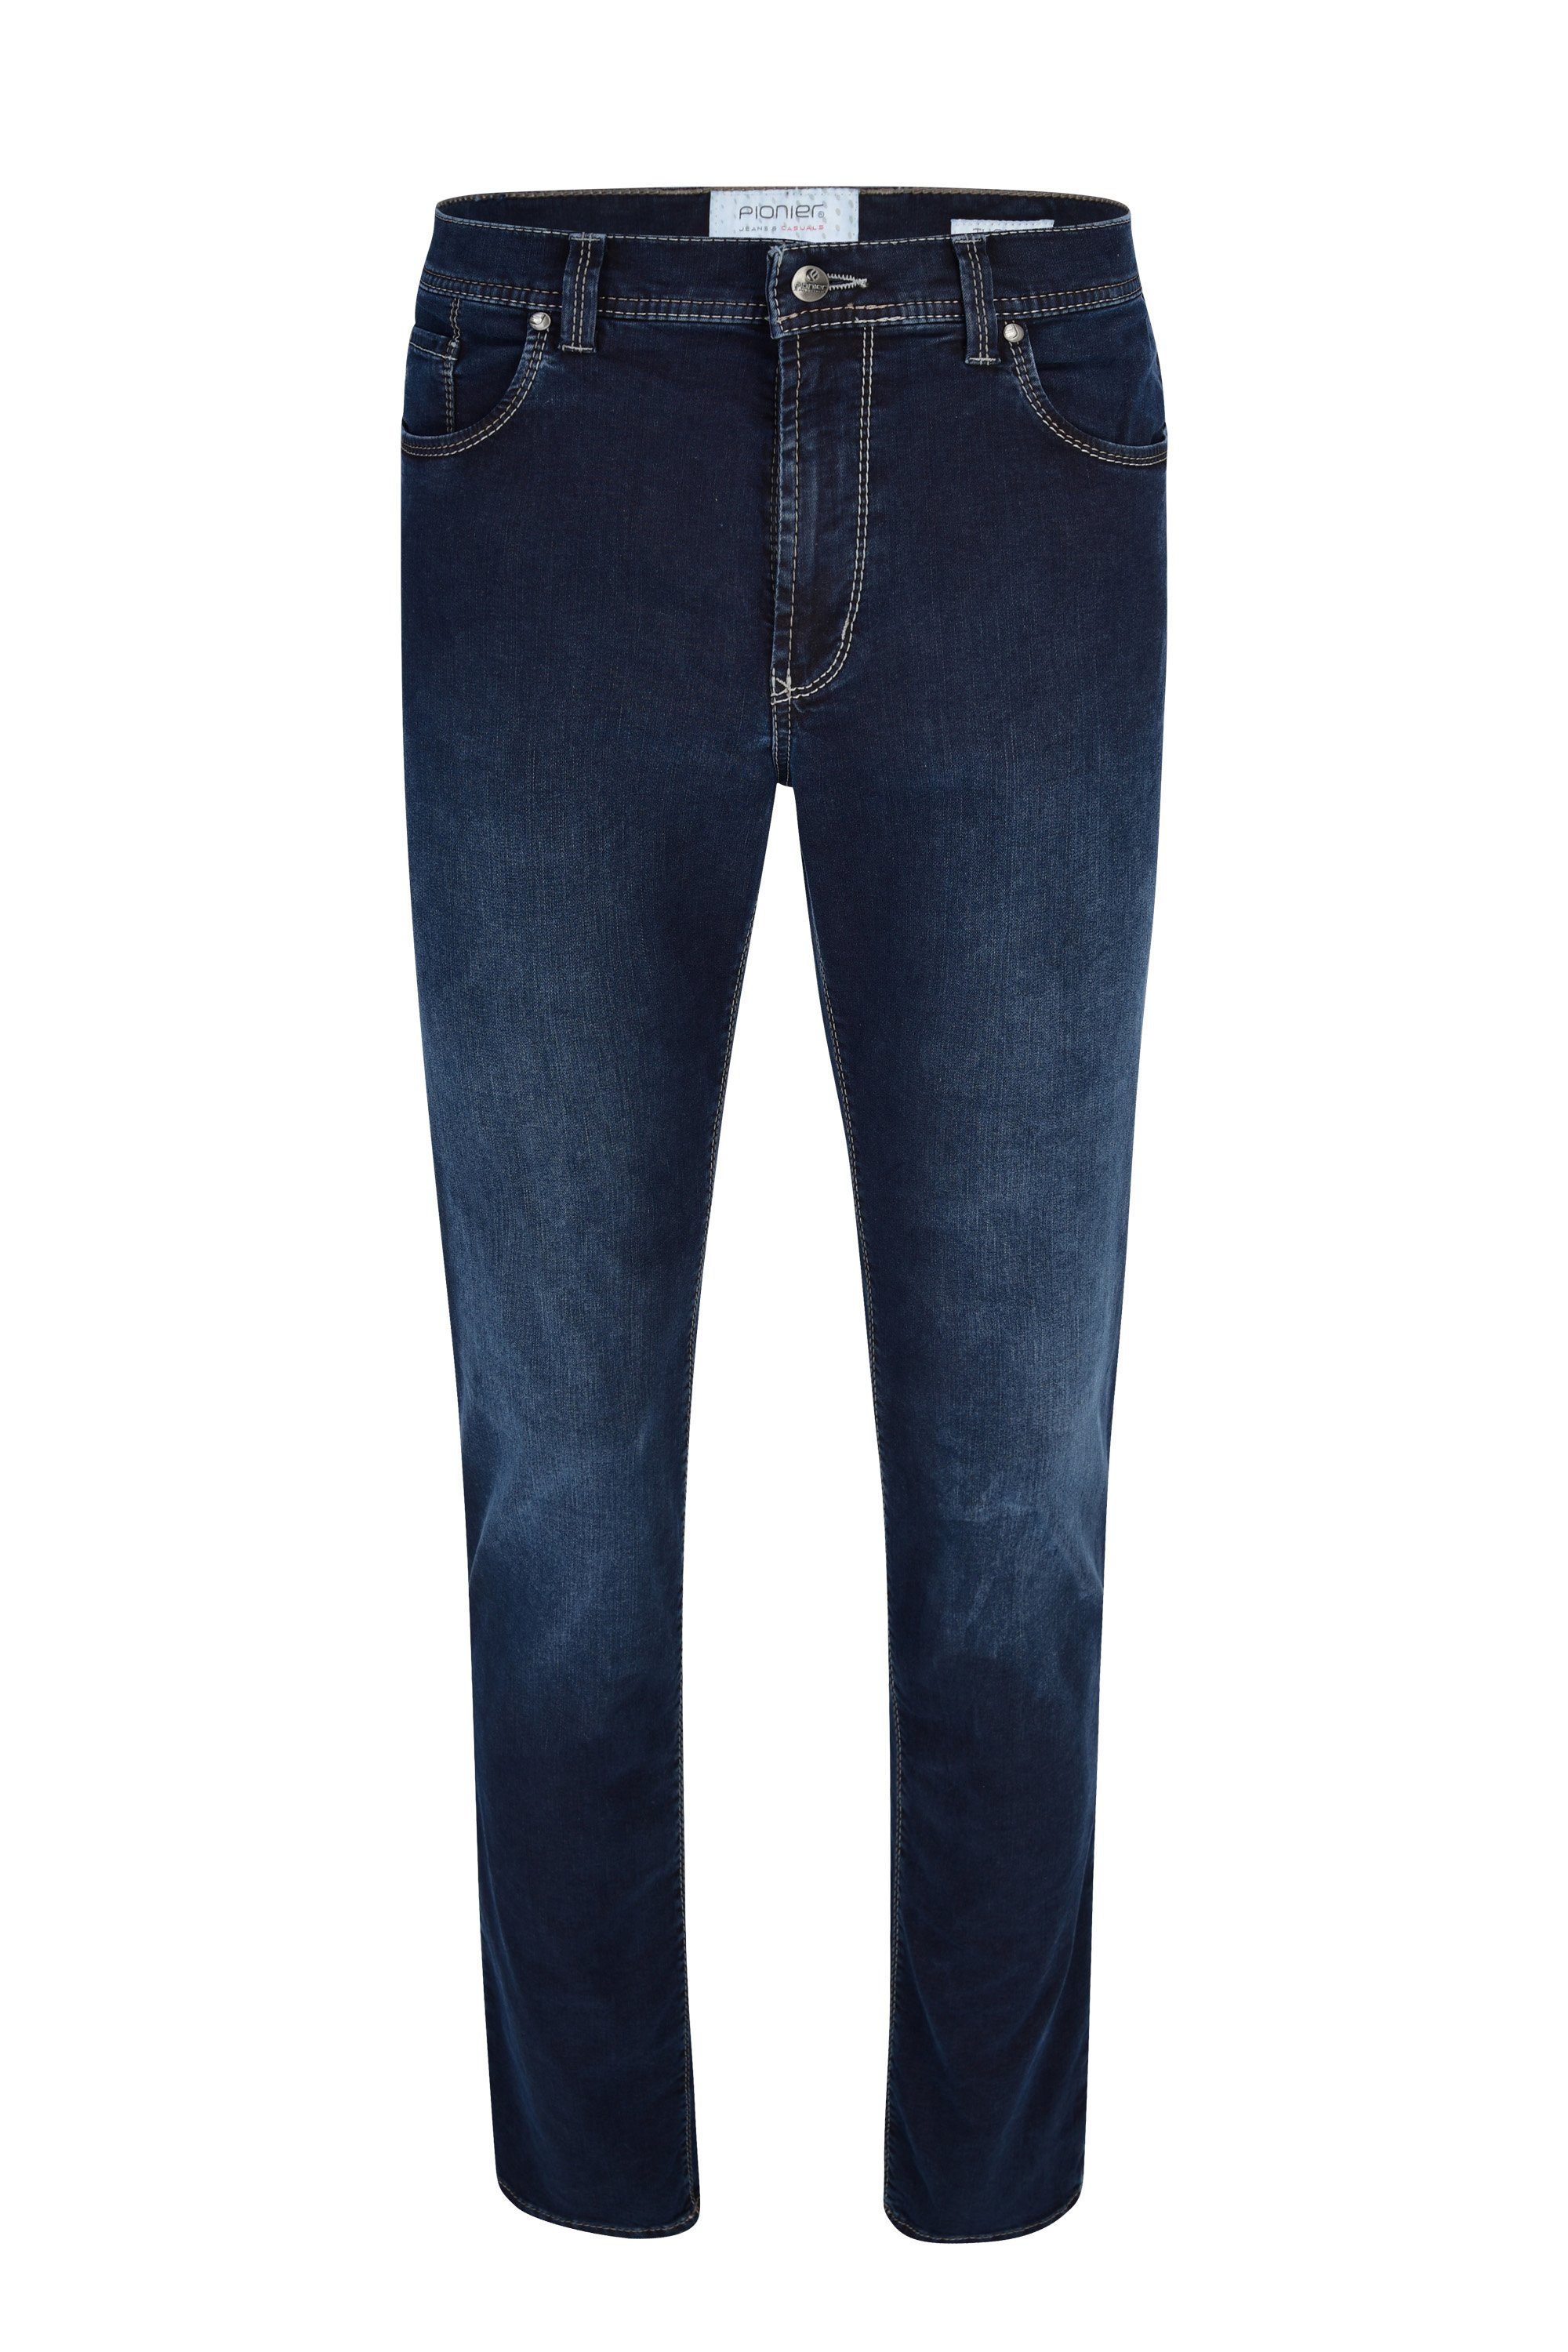 Pionier 5-Pocket-Jeans PIONIER THOMAS dark blue 2079 6101.665